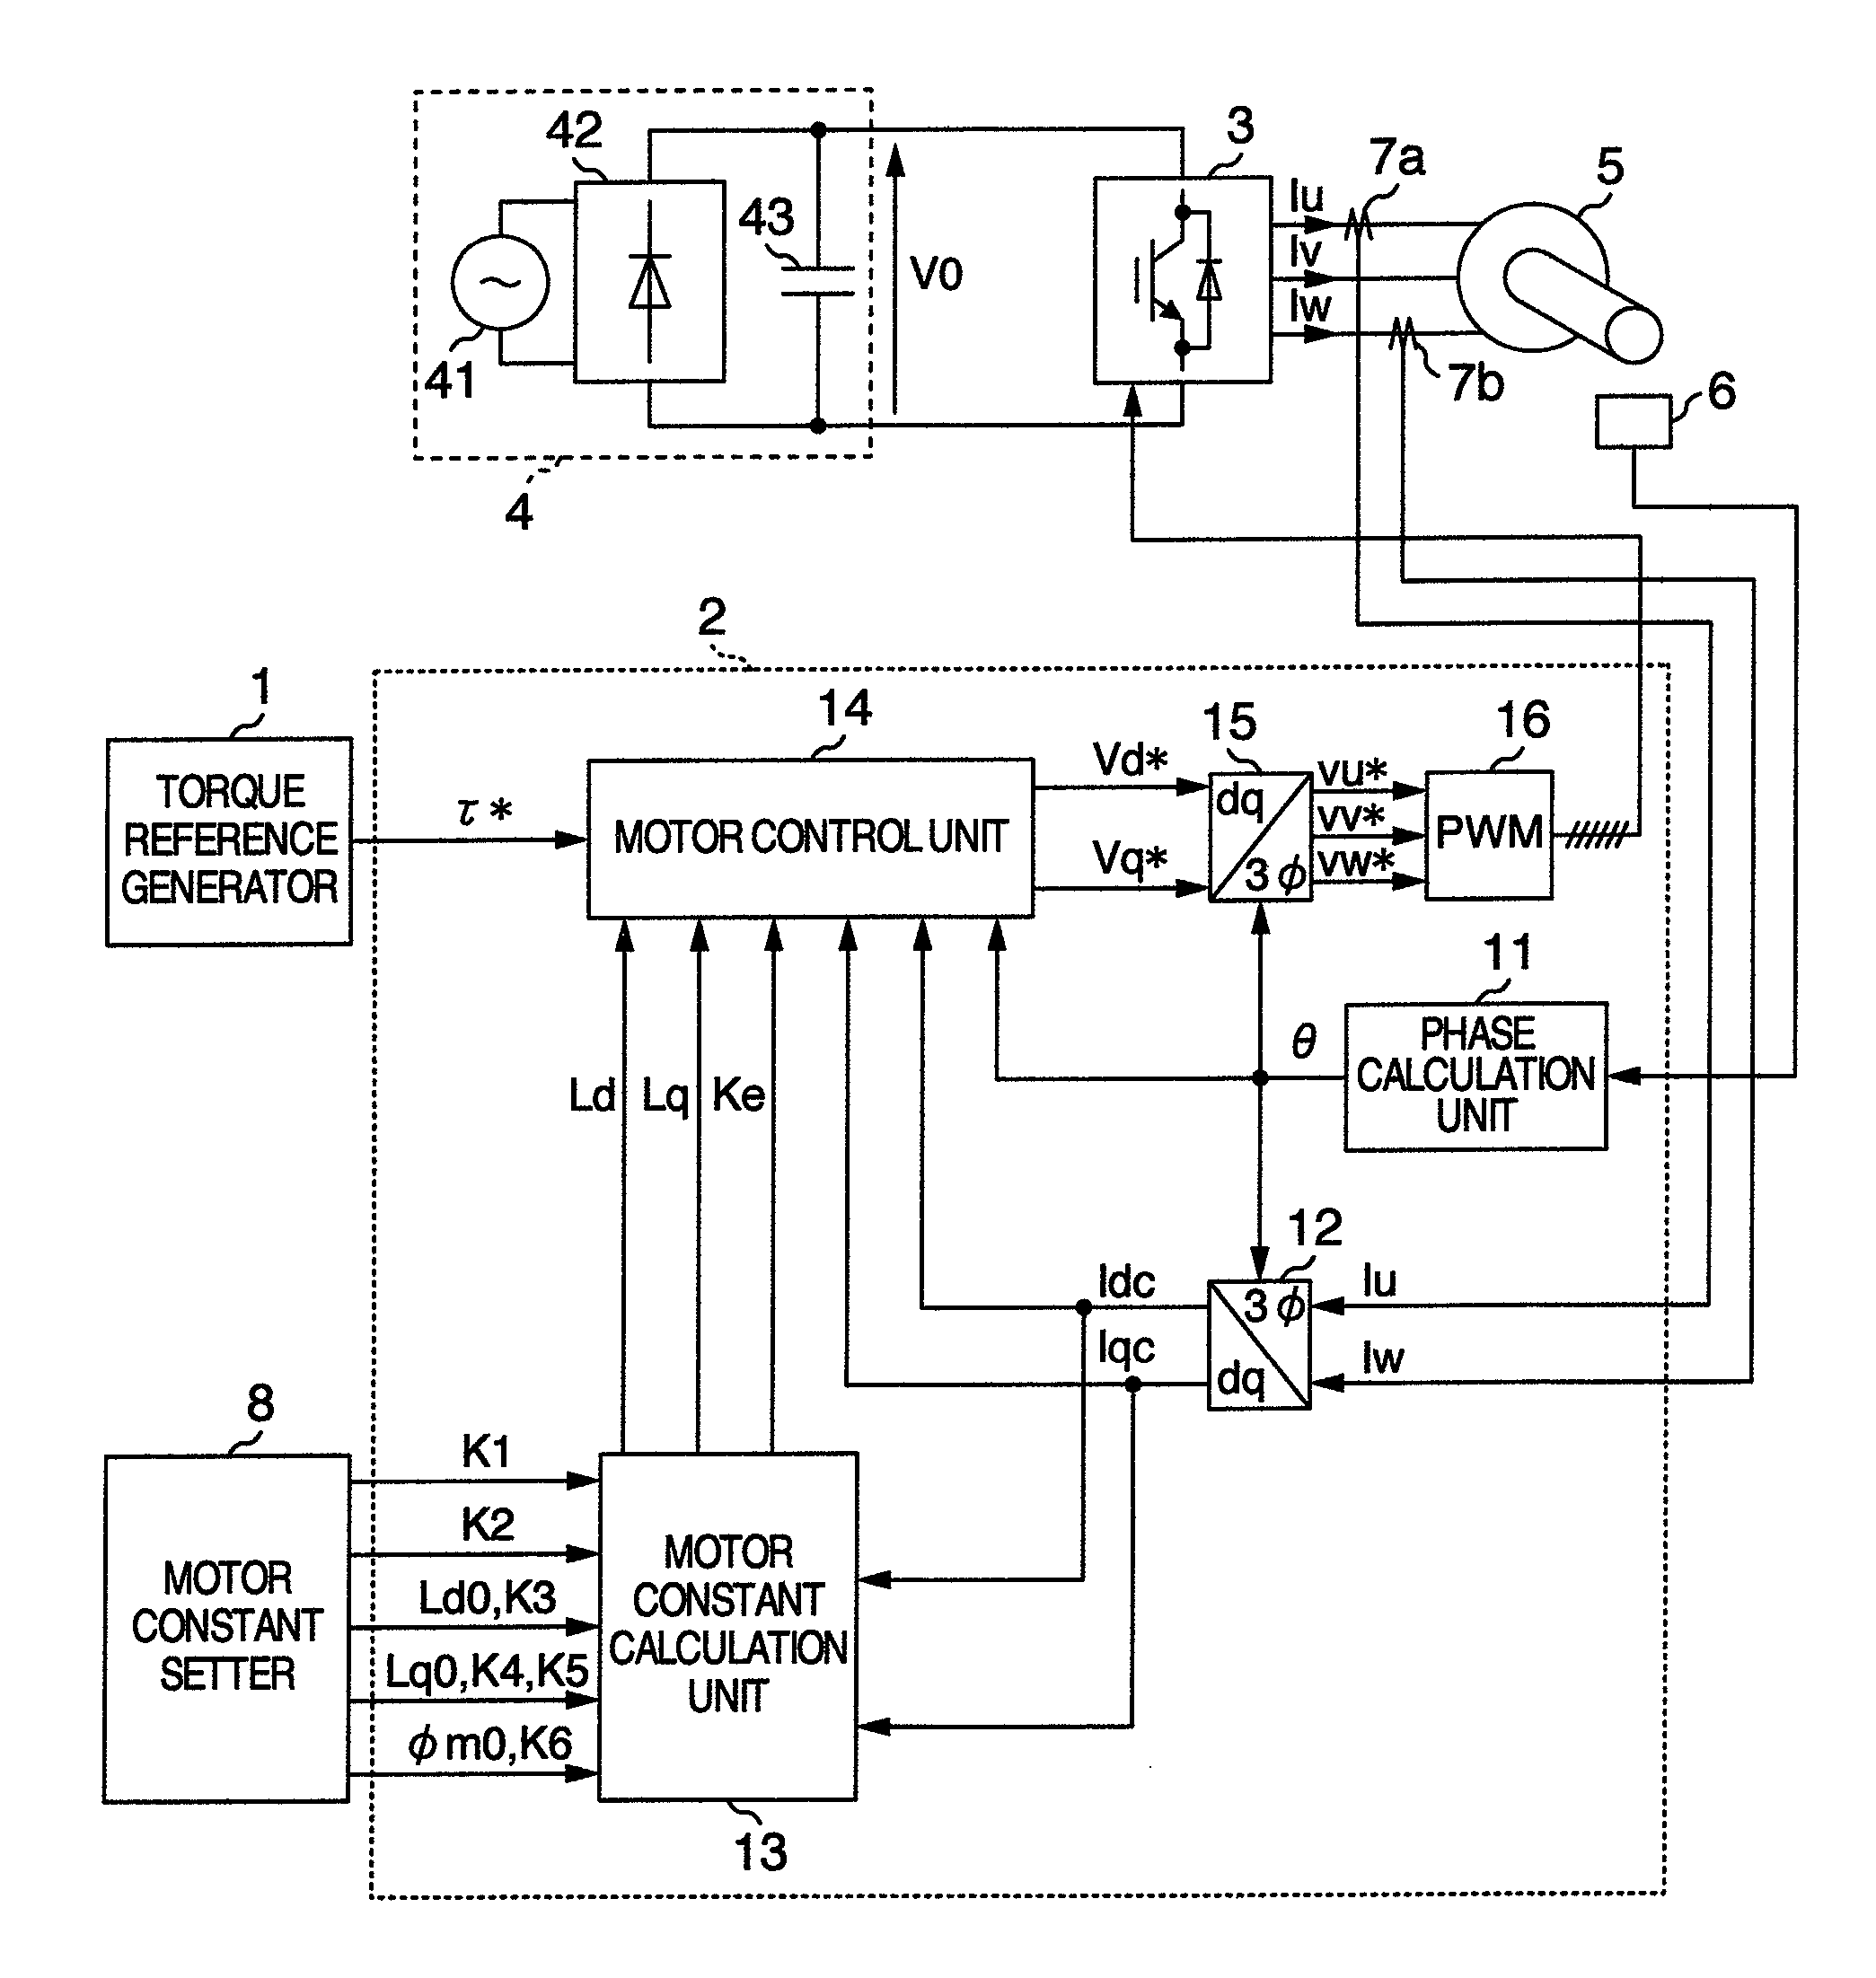 Control apparatus for AC motor